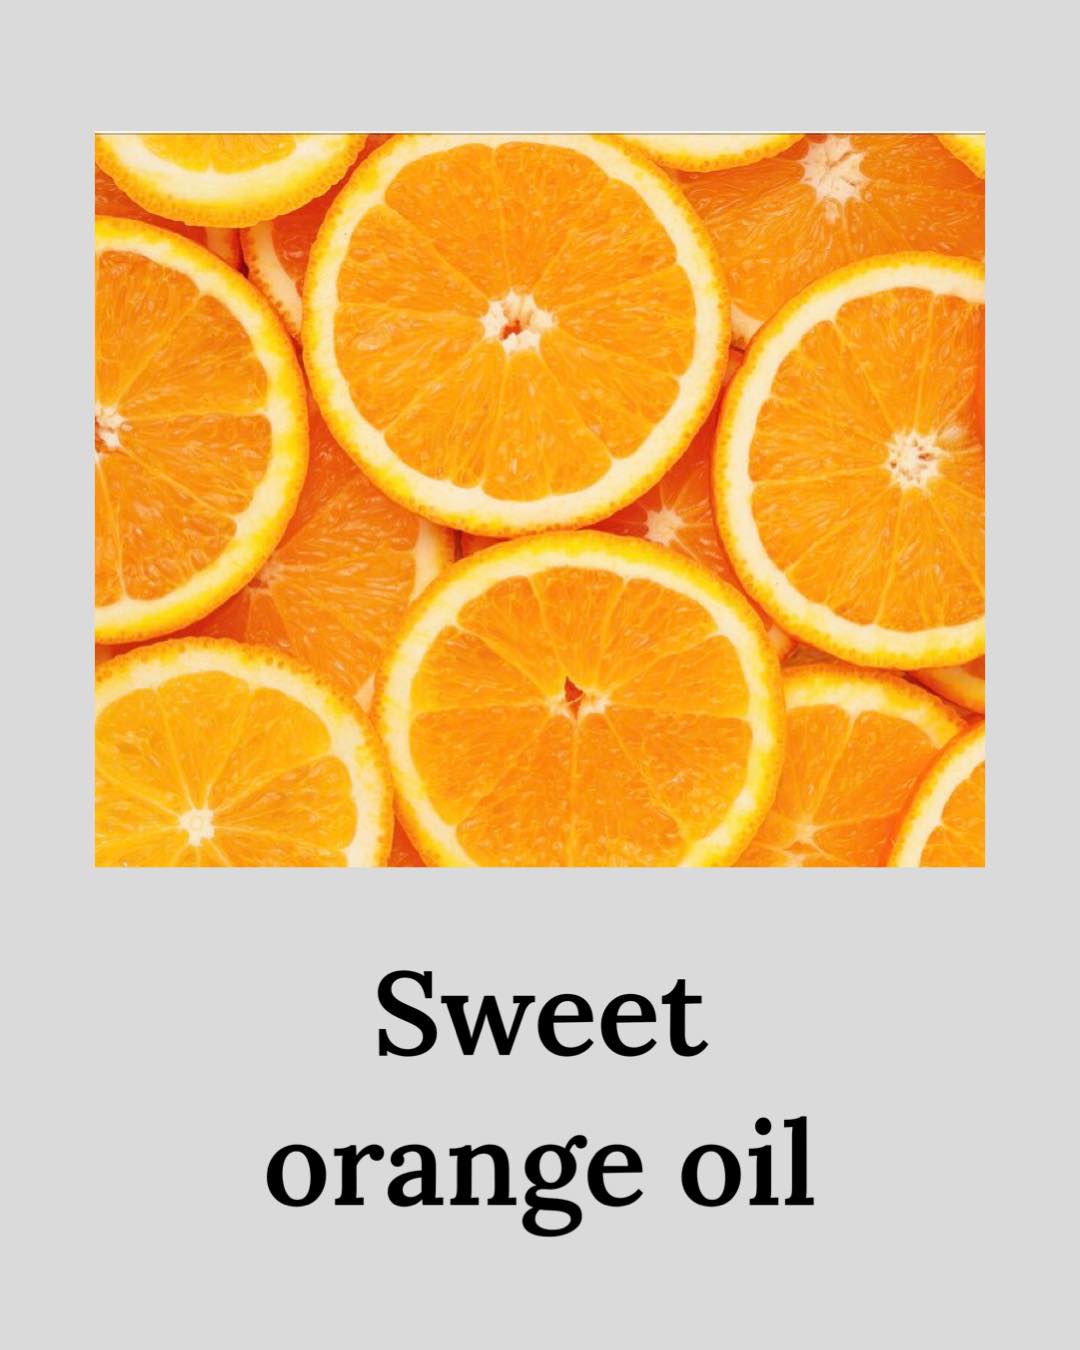 Sweet Orange oil